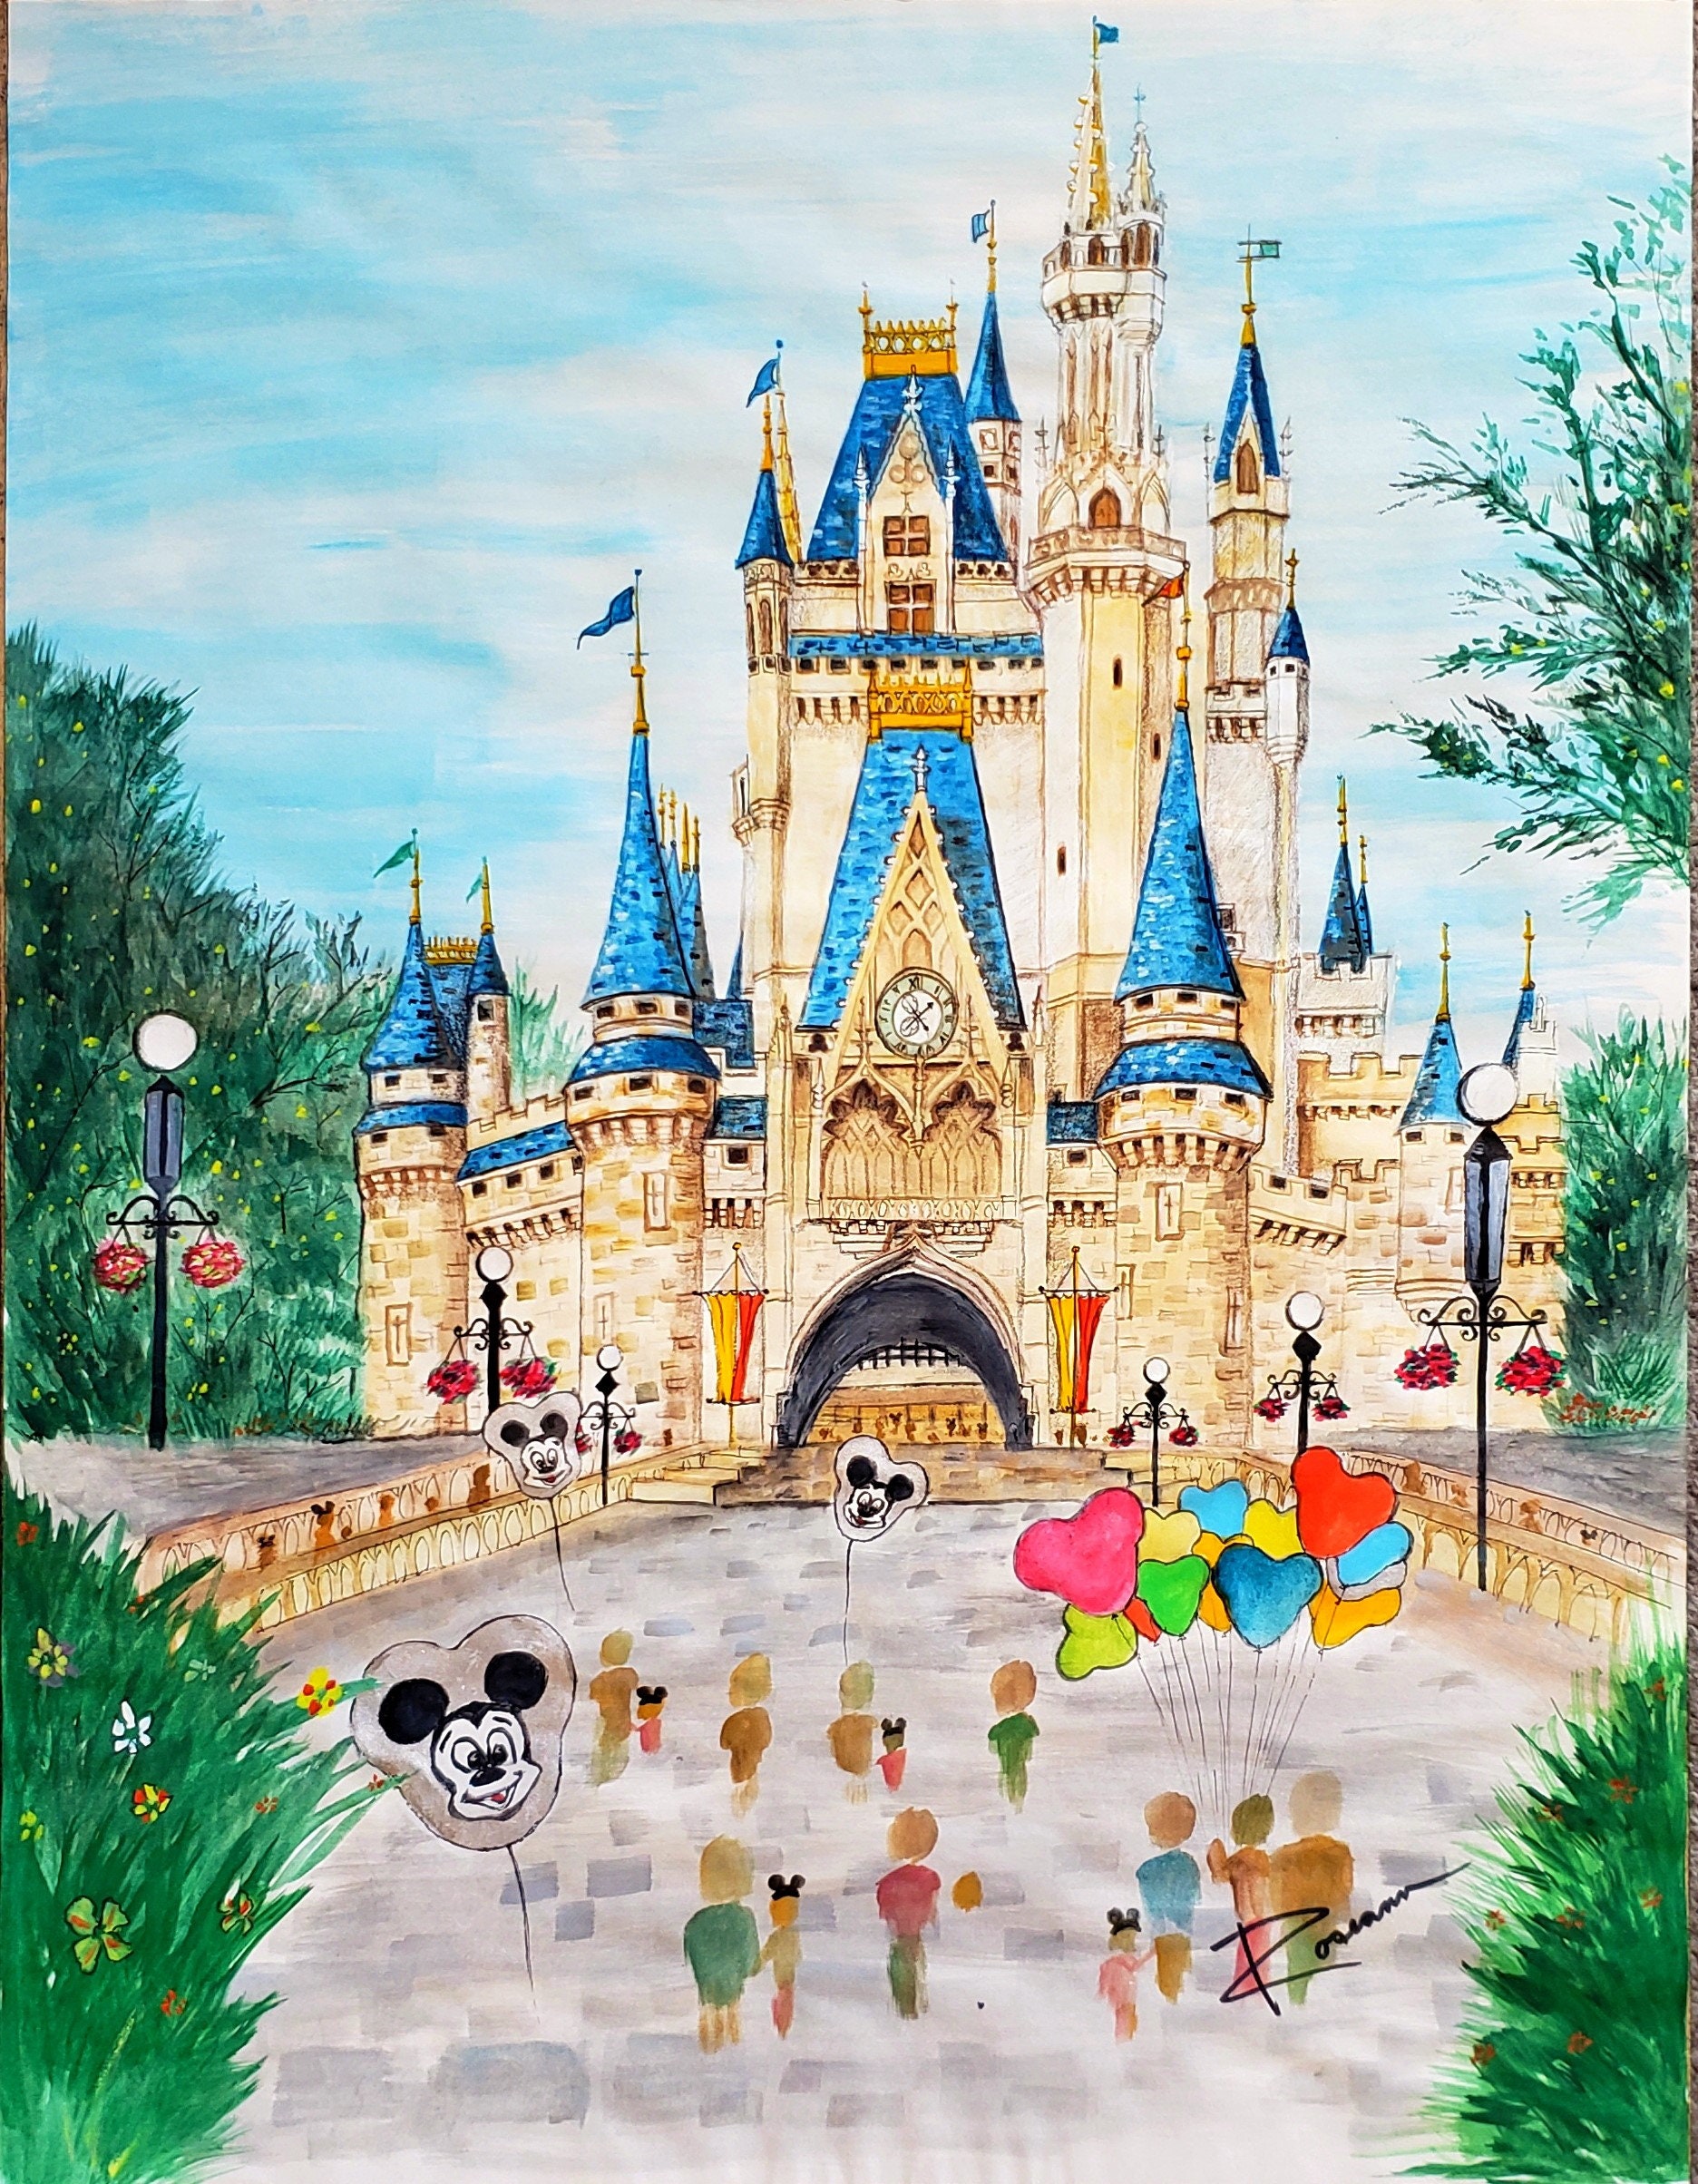 Disney Parks Cinderella Castle Youth Crossbody Bag Purse